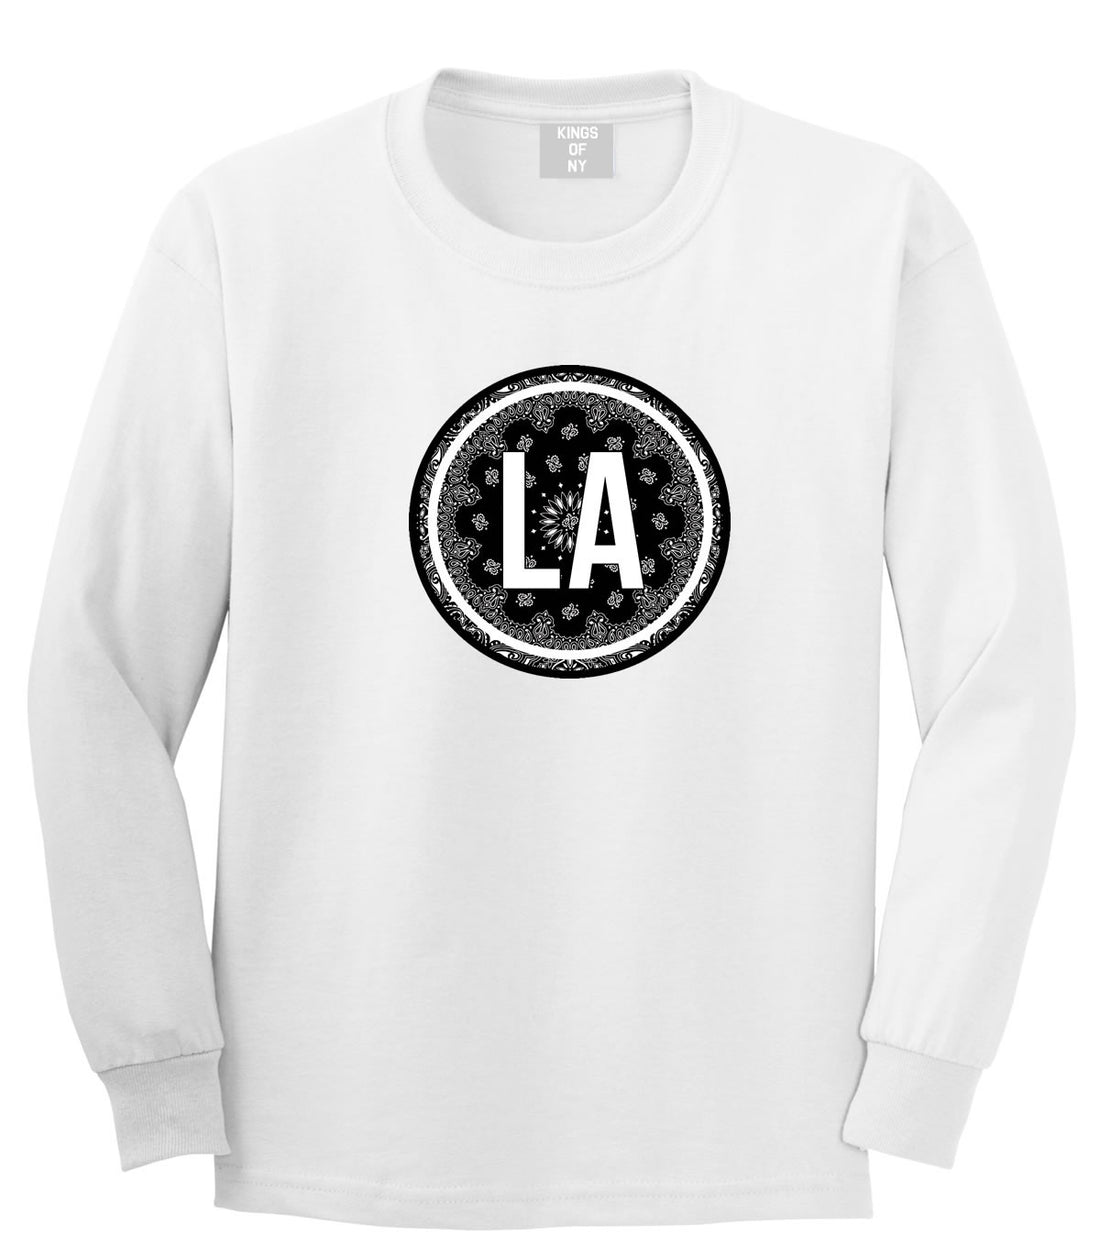 Kings Of NY La Los Angeles Cali California Bandana Long Sleeve T-Shirt in White